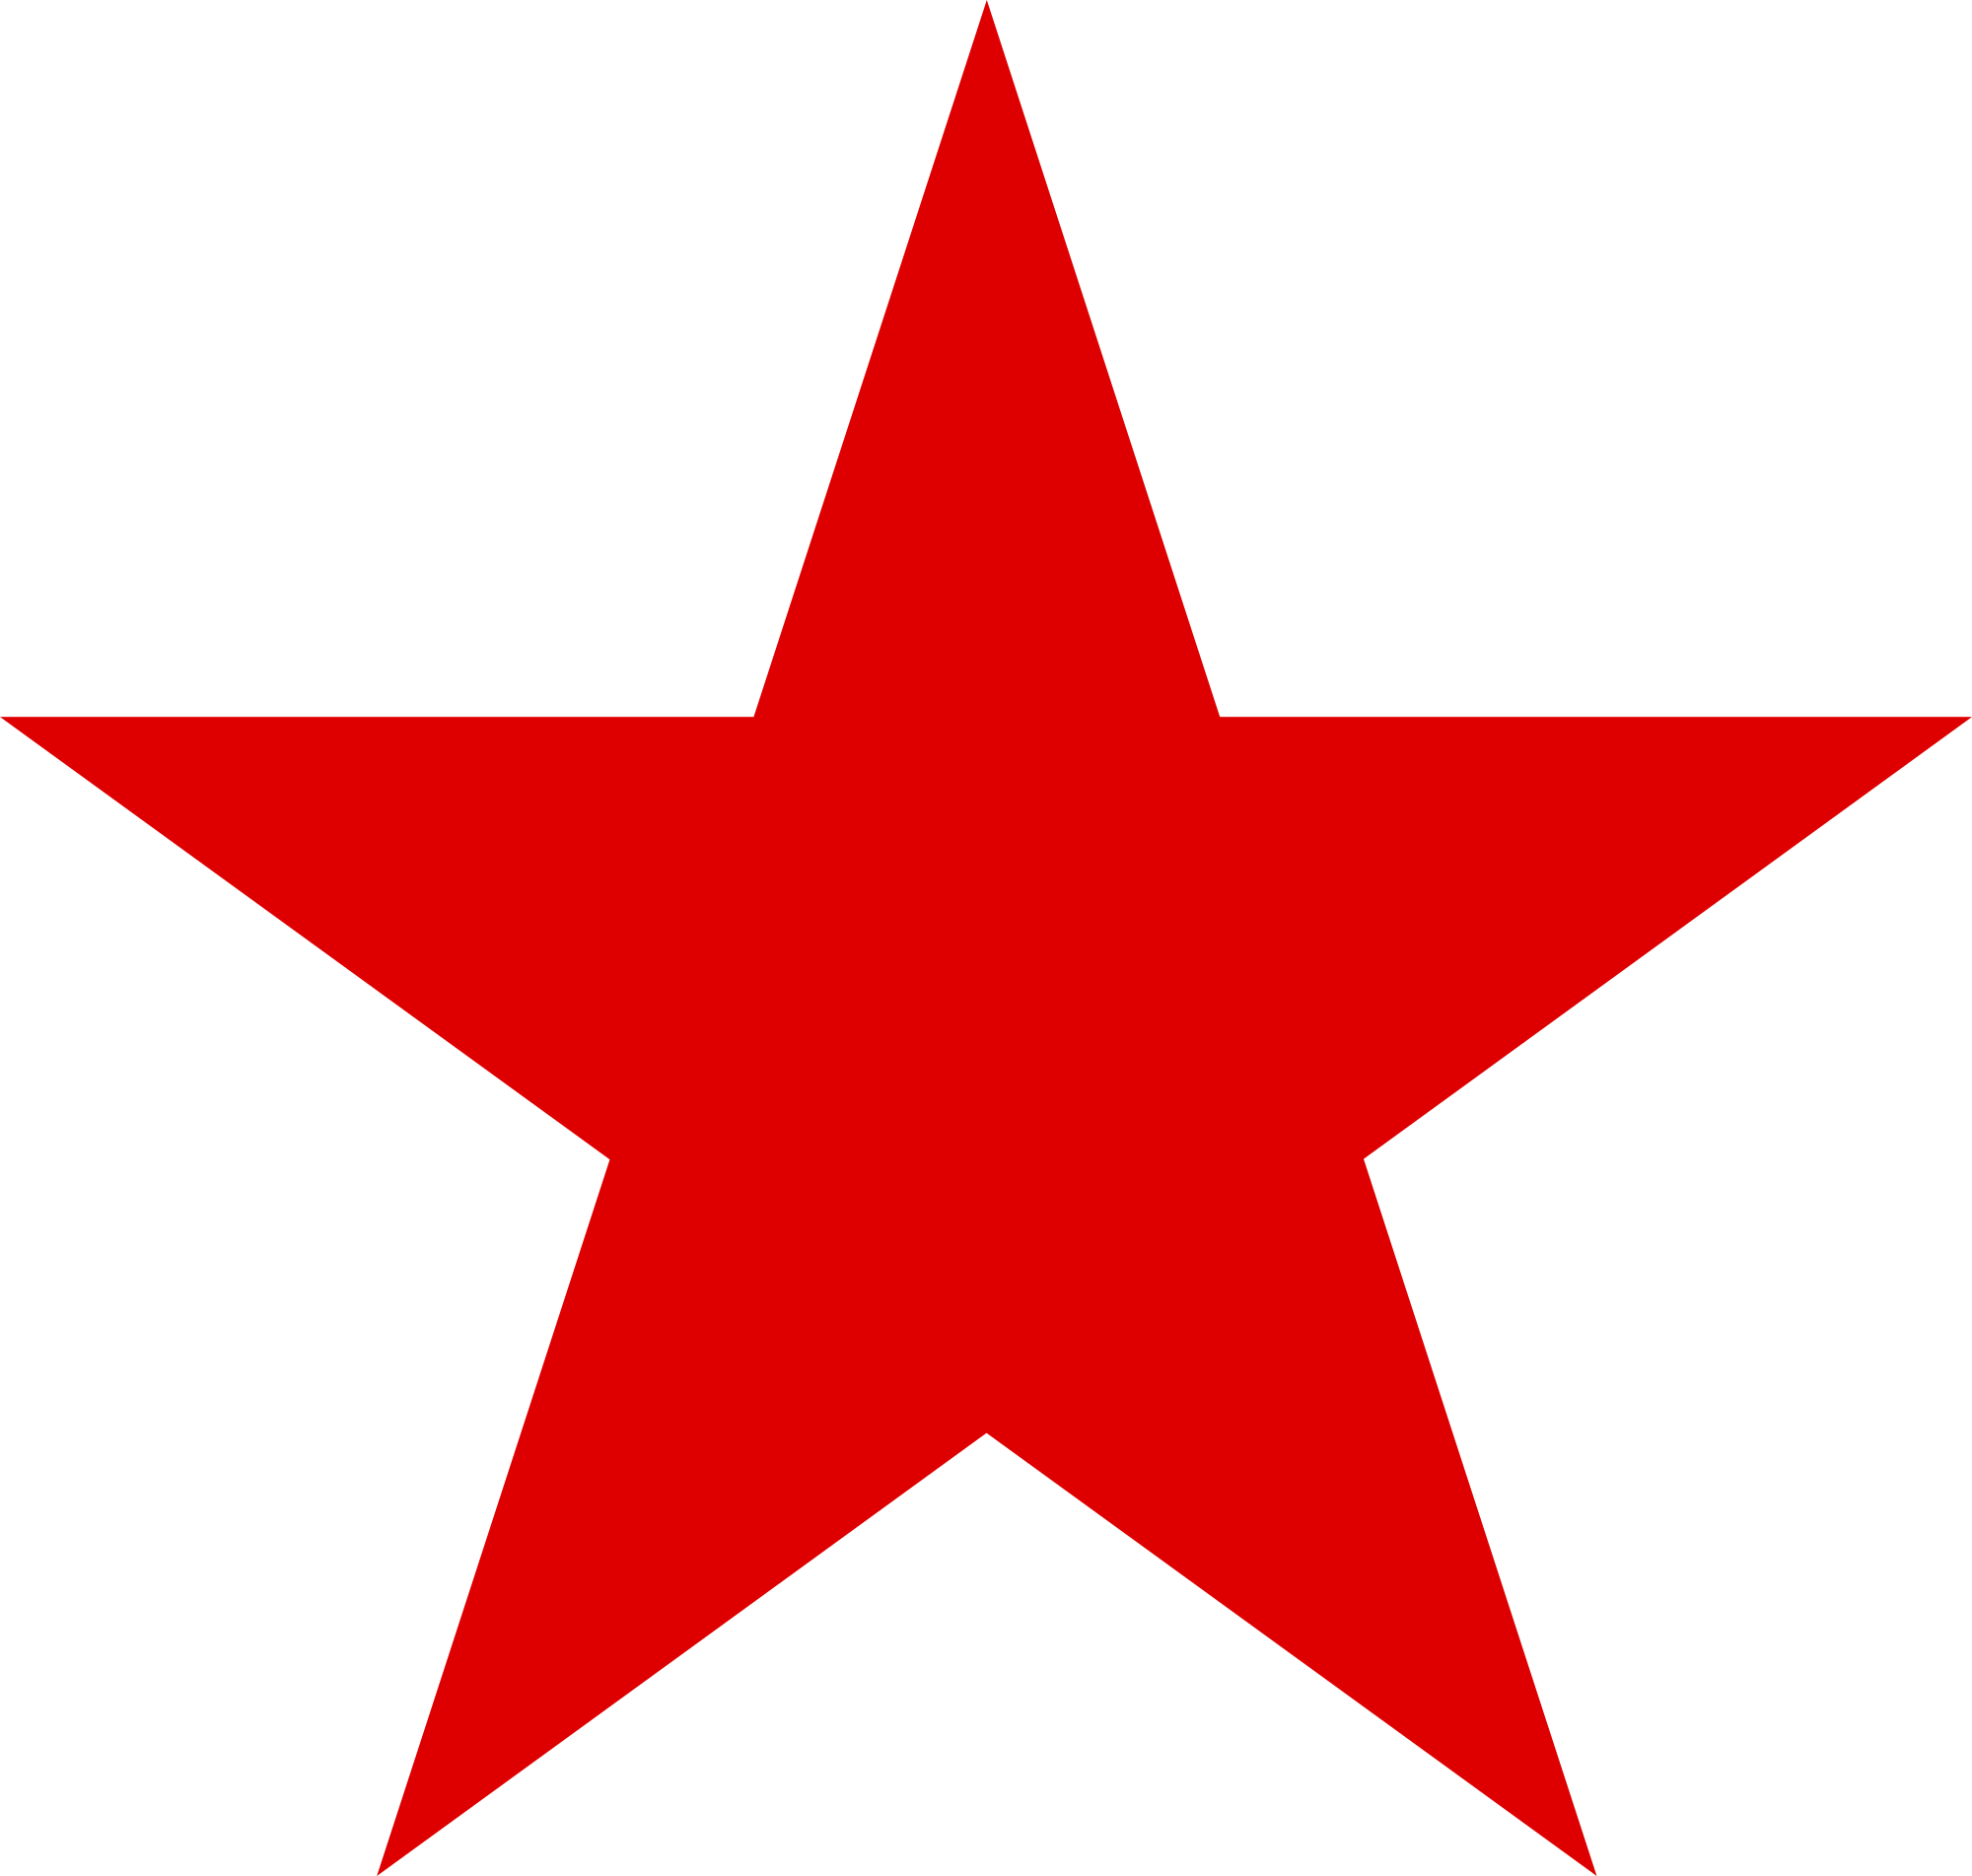 Red star - Wikipedia